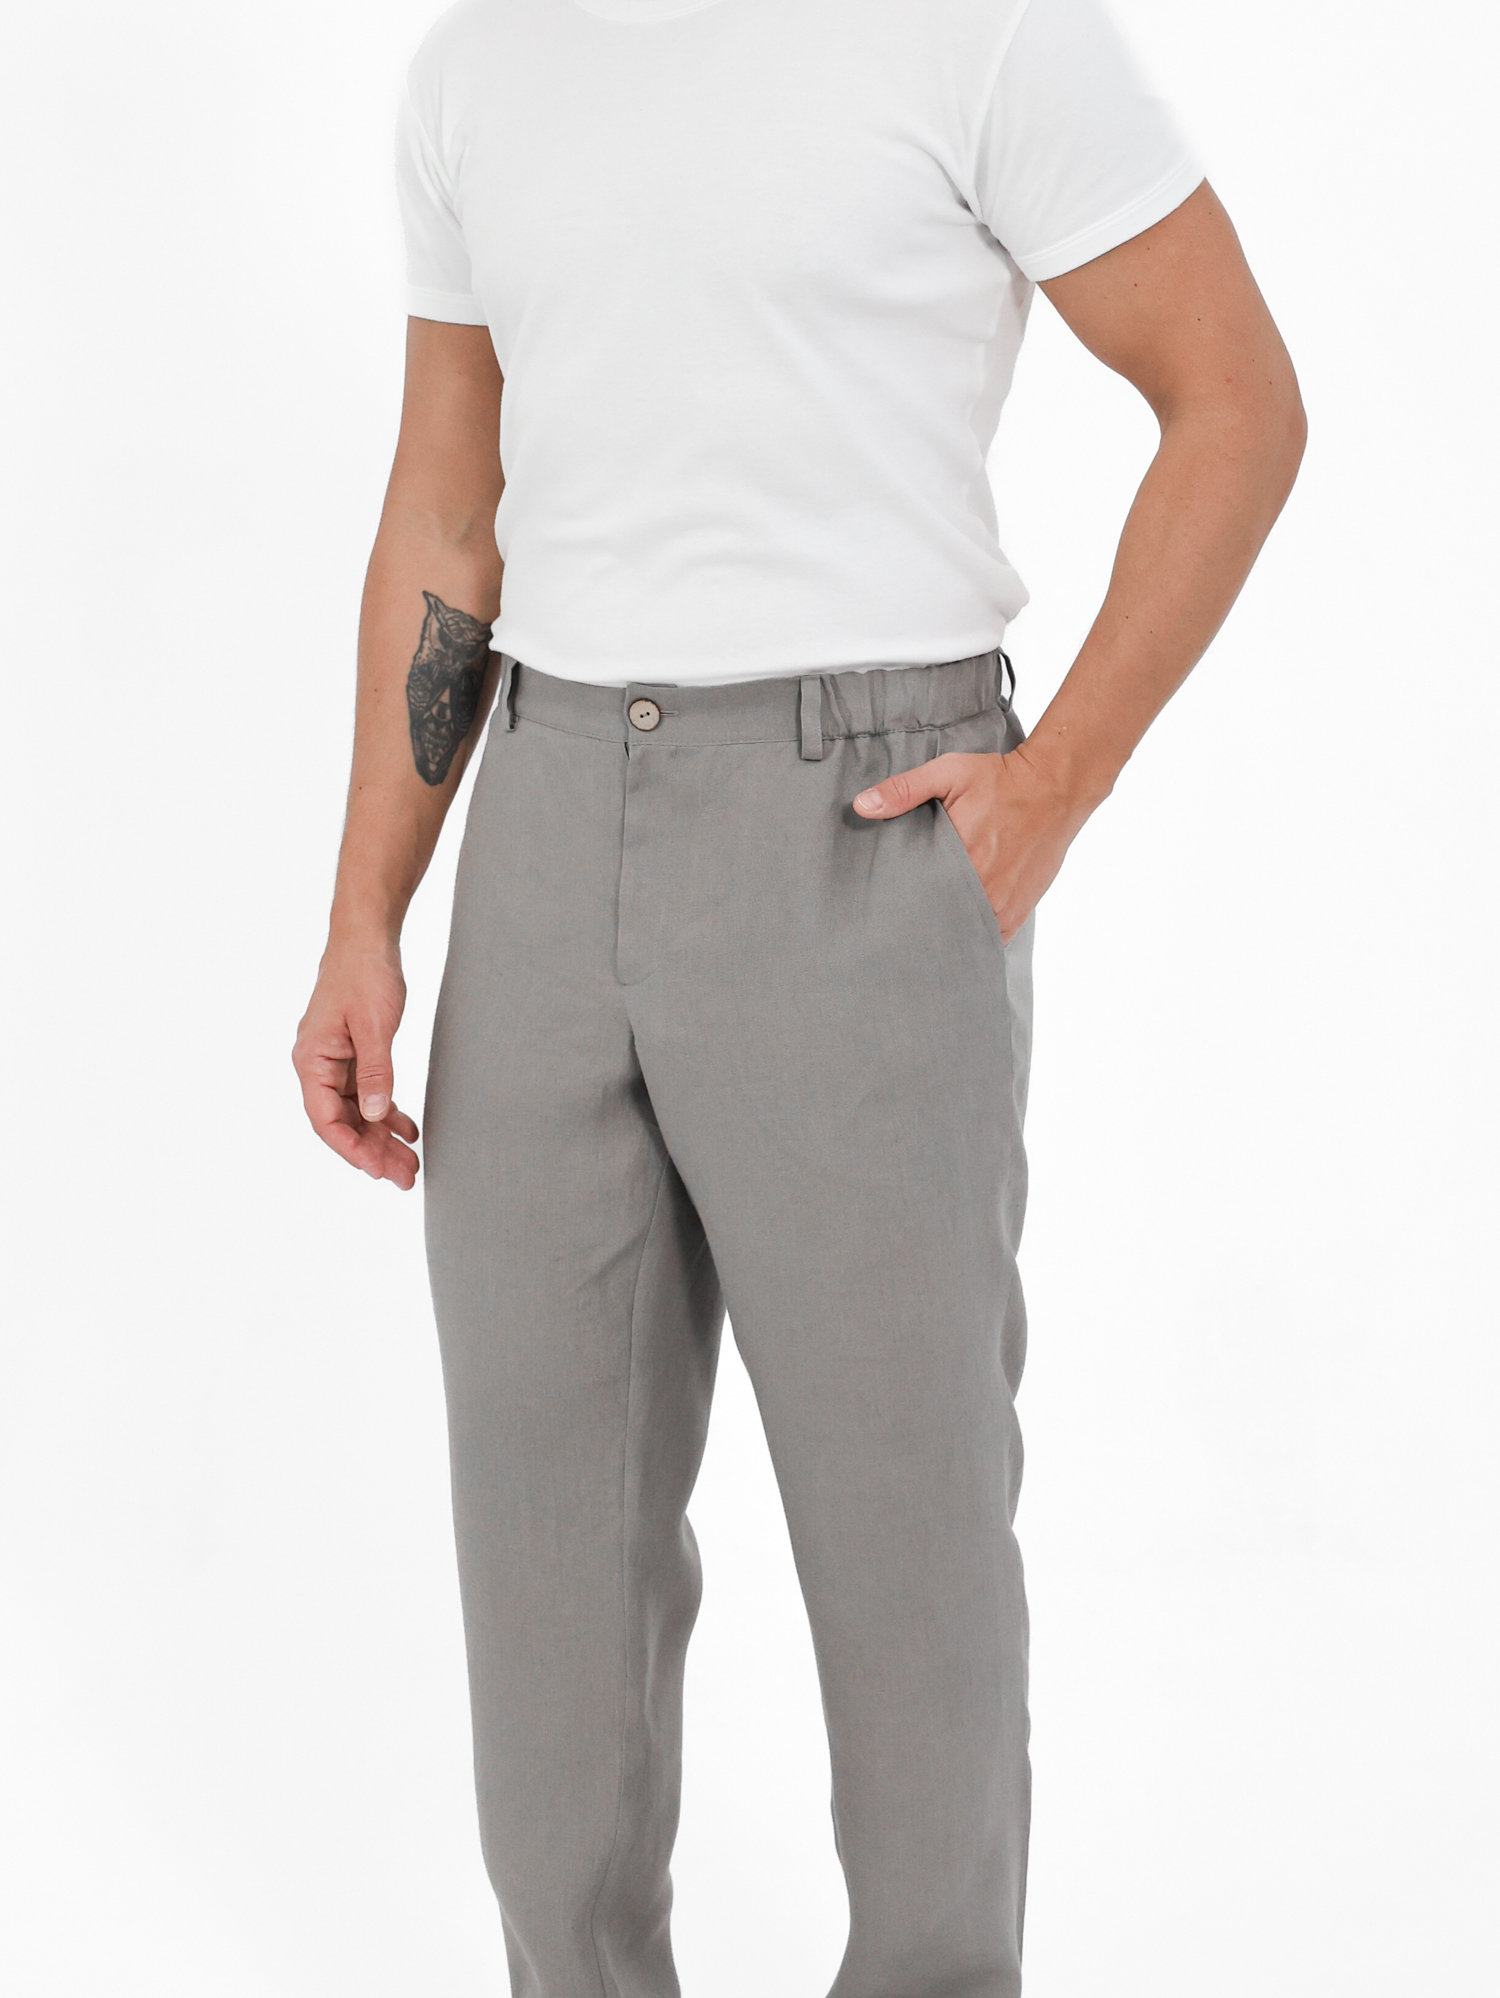 Men's linen pants with a zipper